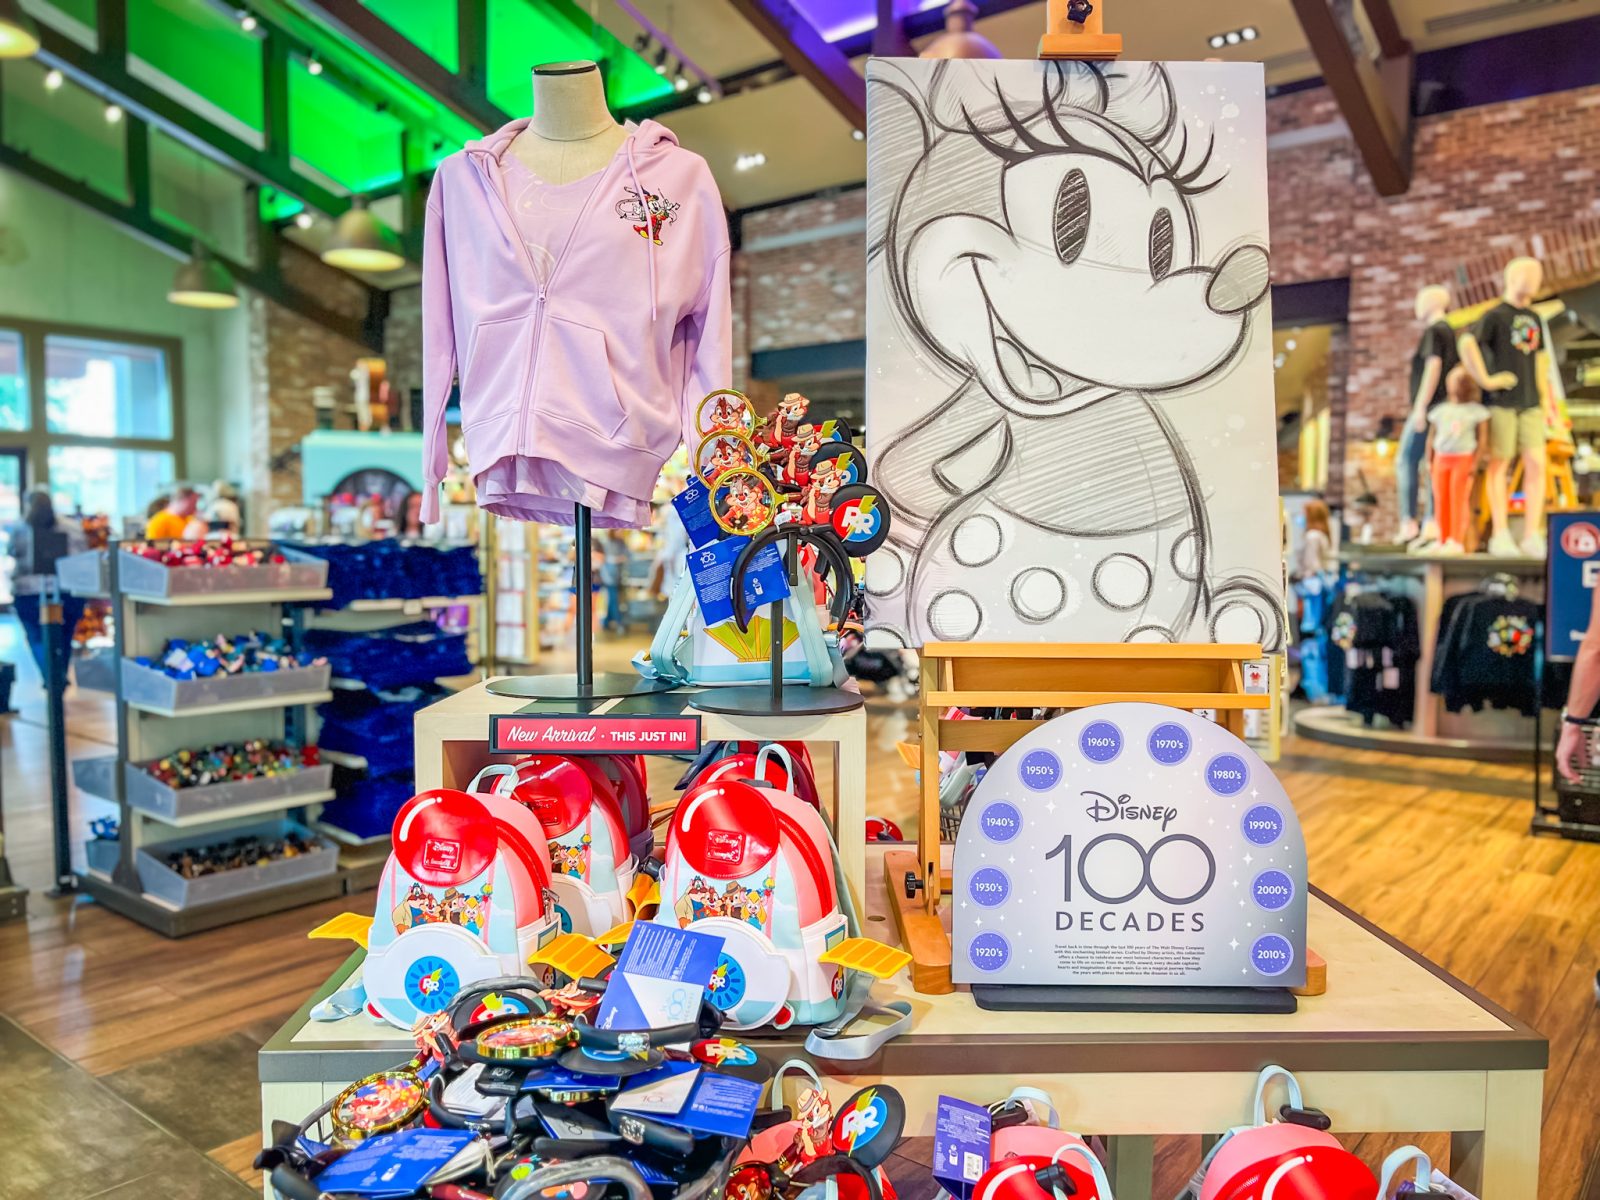 Disney100 Decades Merchandise